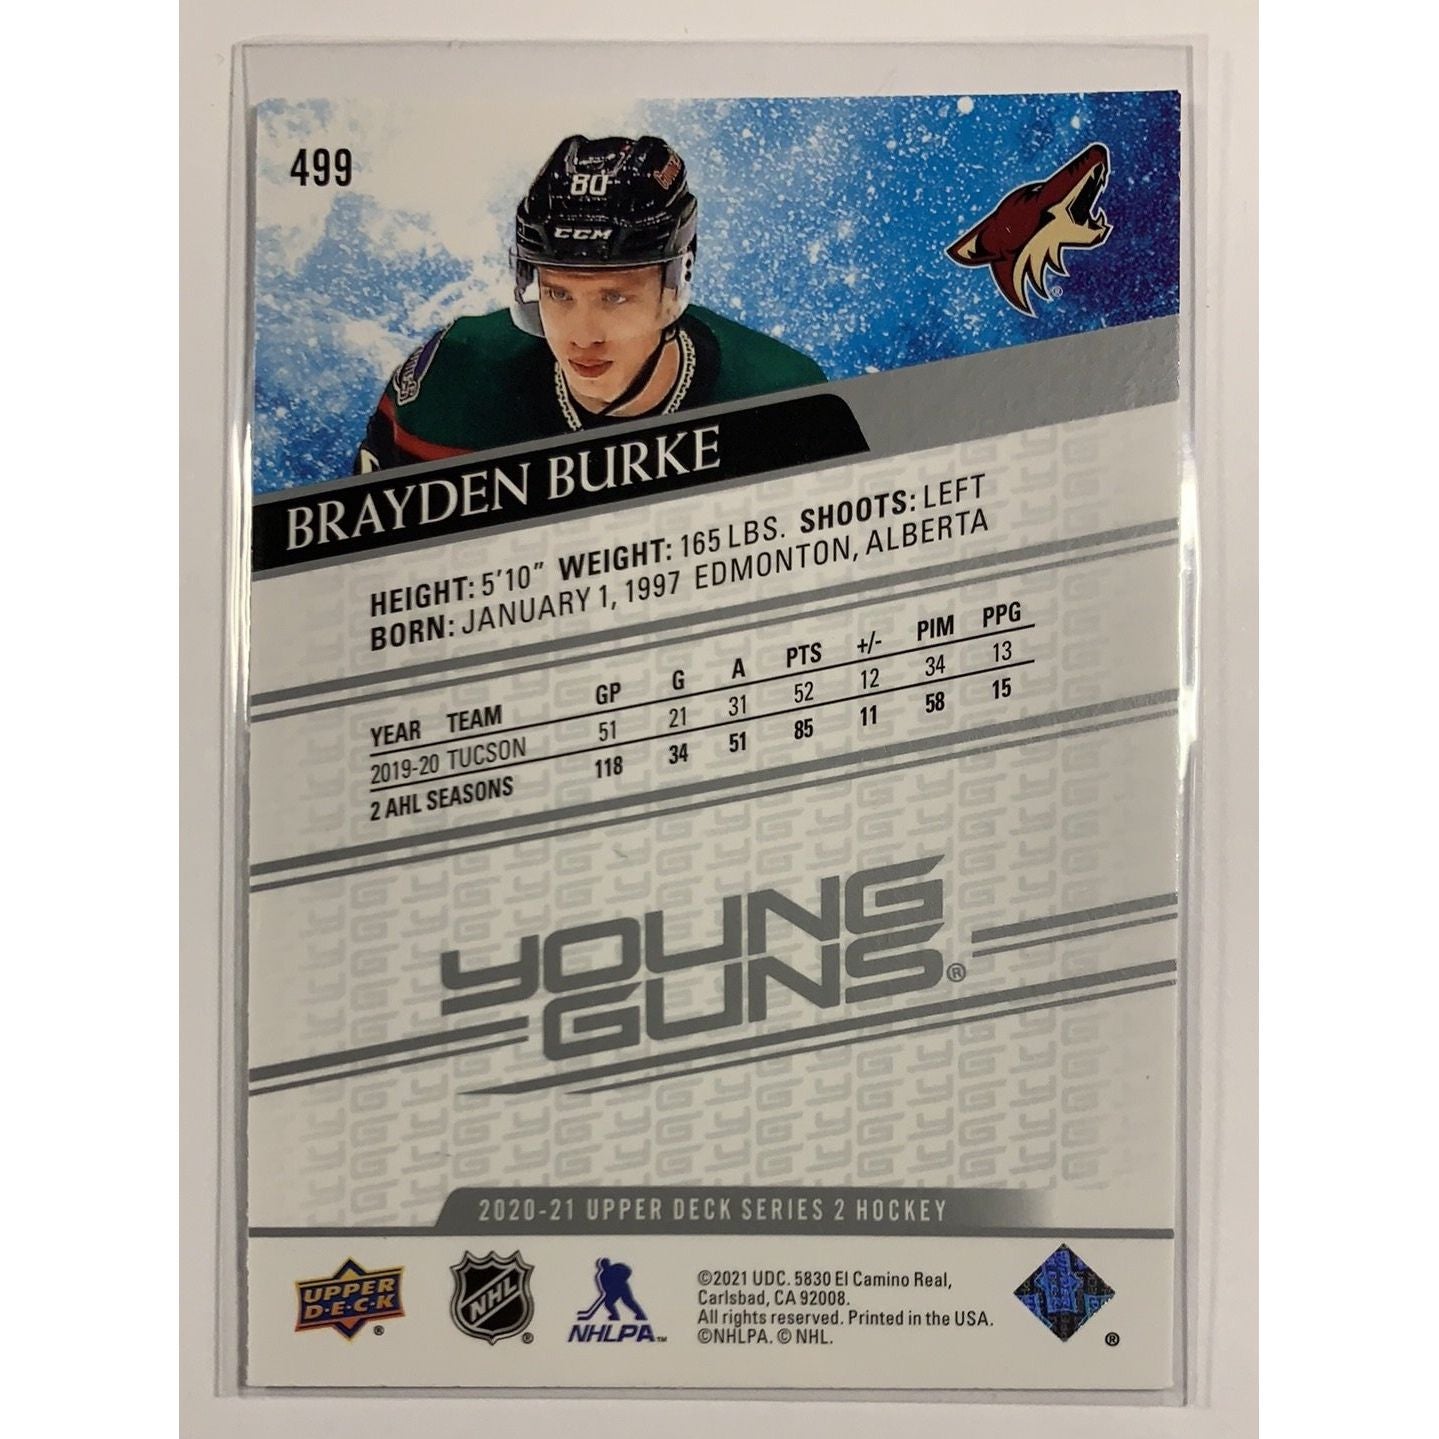  2020-21 Upper Deck Series 2 Brayden Burke Young Guns  Local Legends Cards & Collectibles